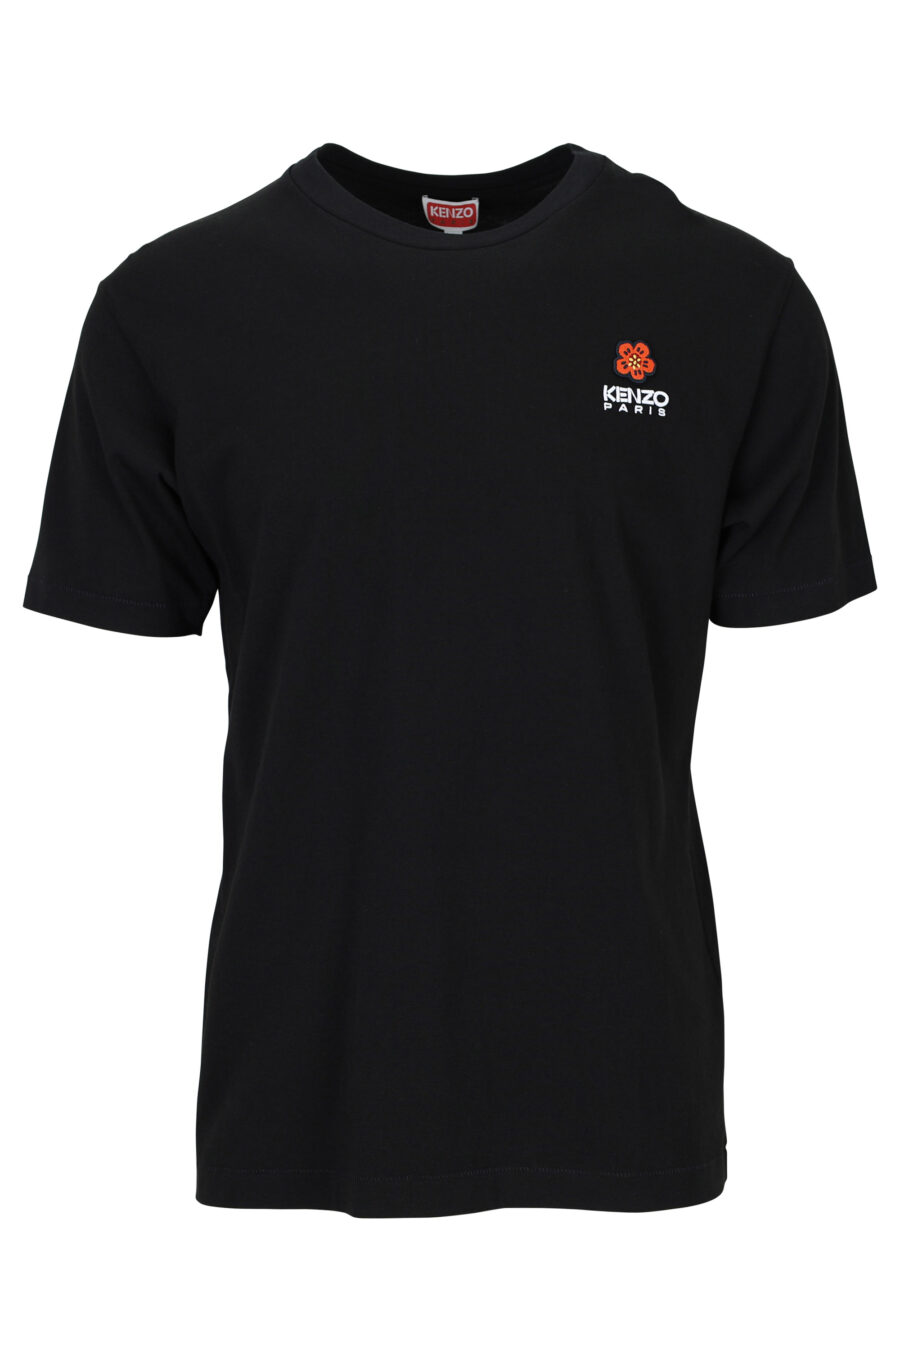 Schwarzes T-Shirt mit Minilogue "kenzo paris" - 3612230367173